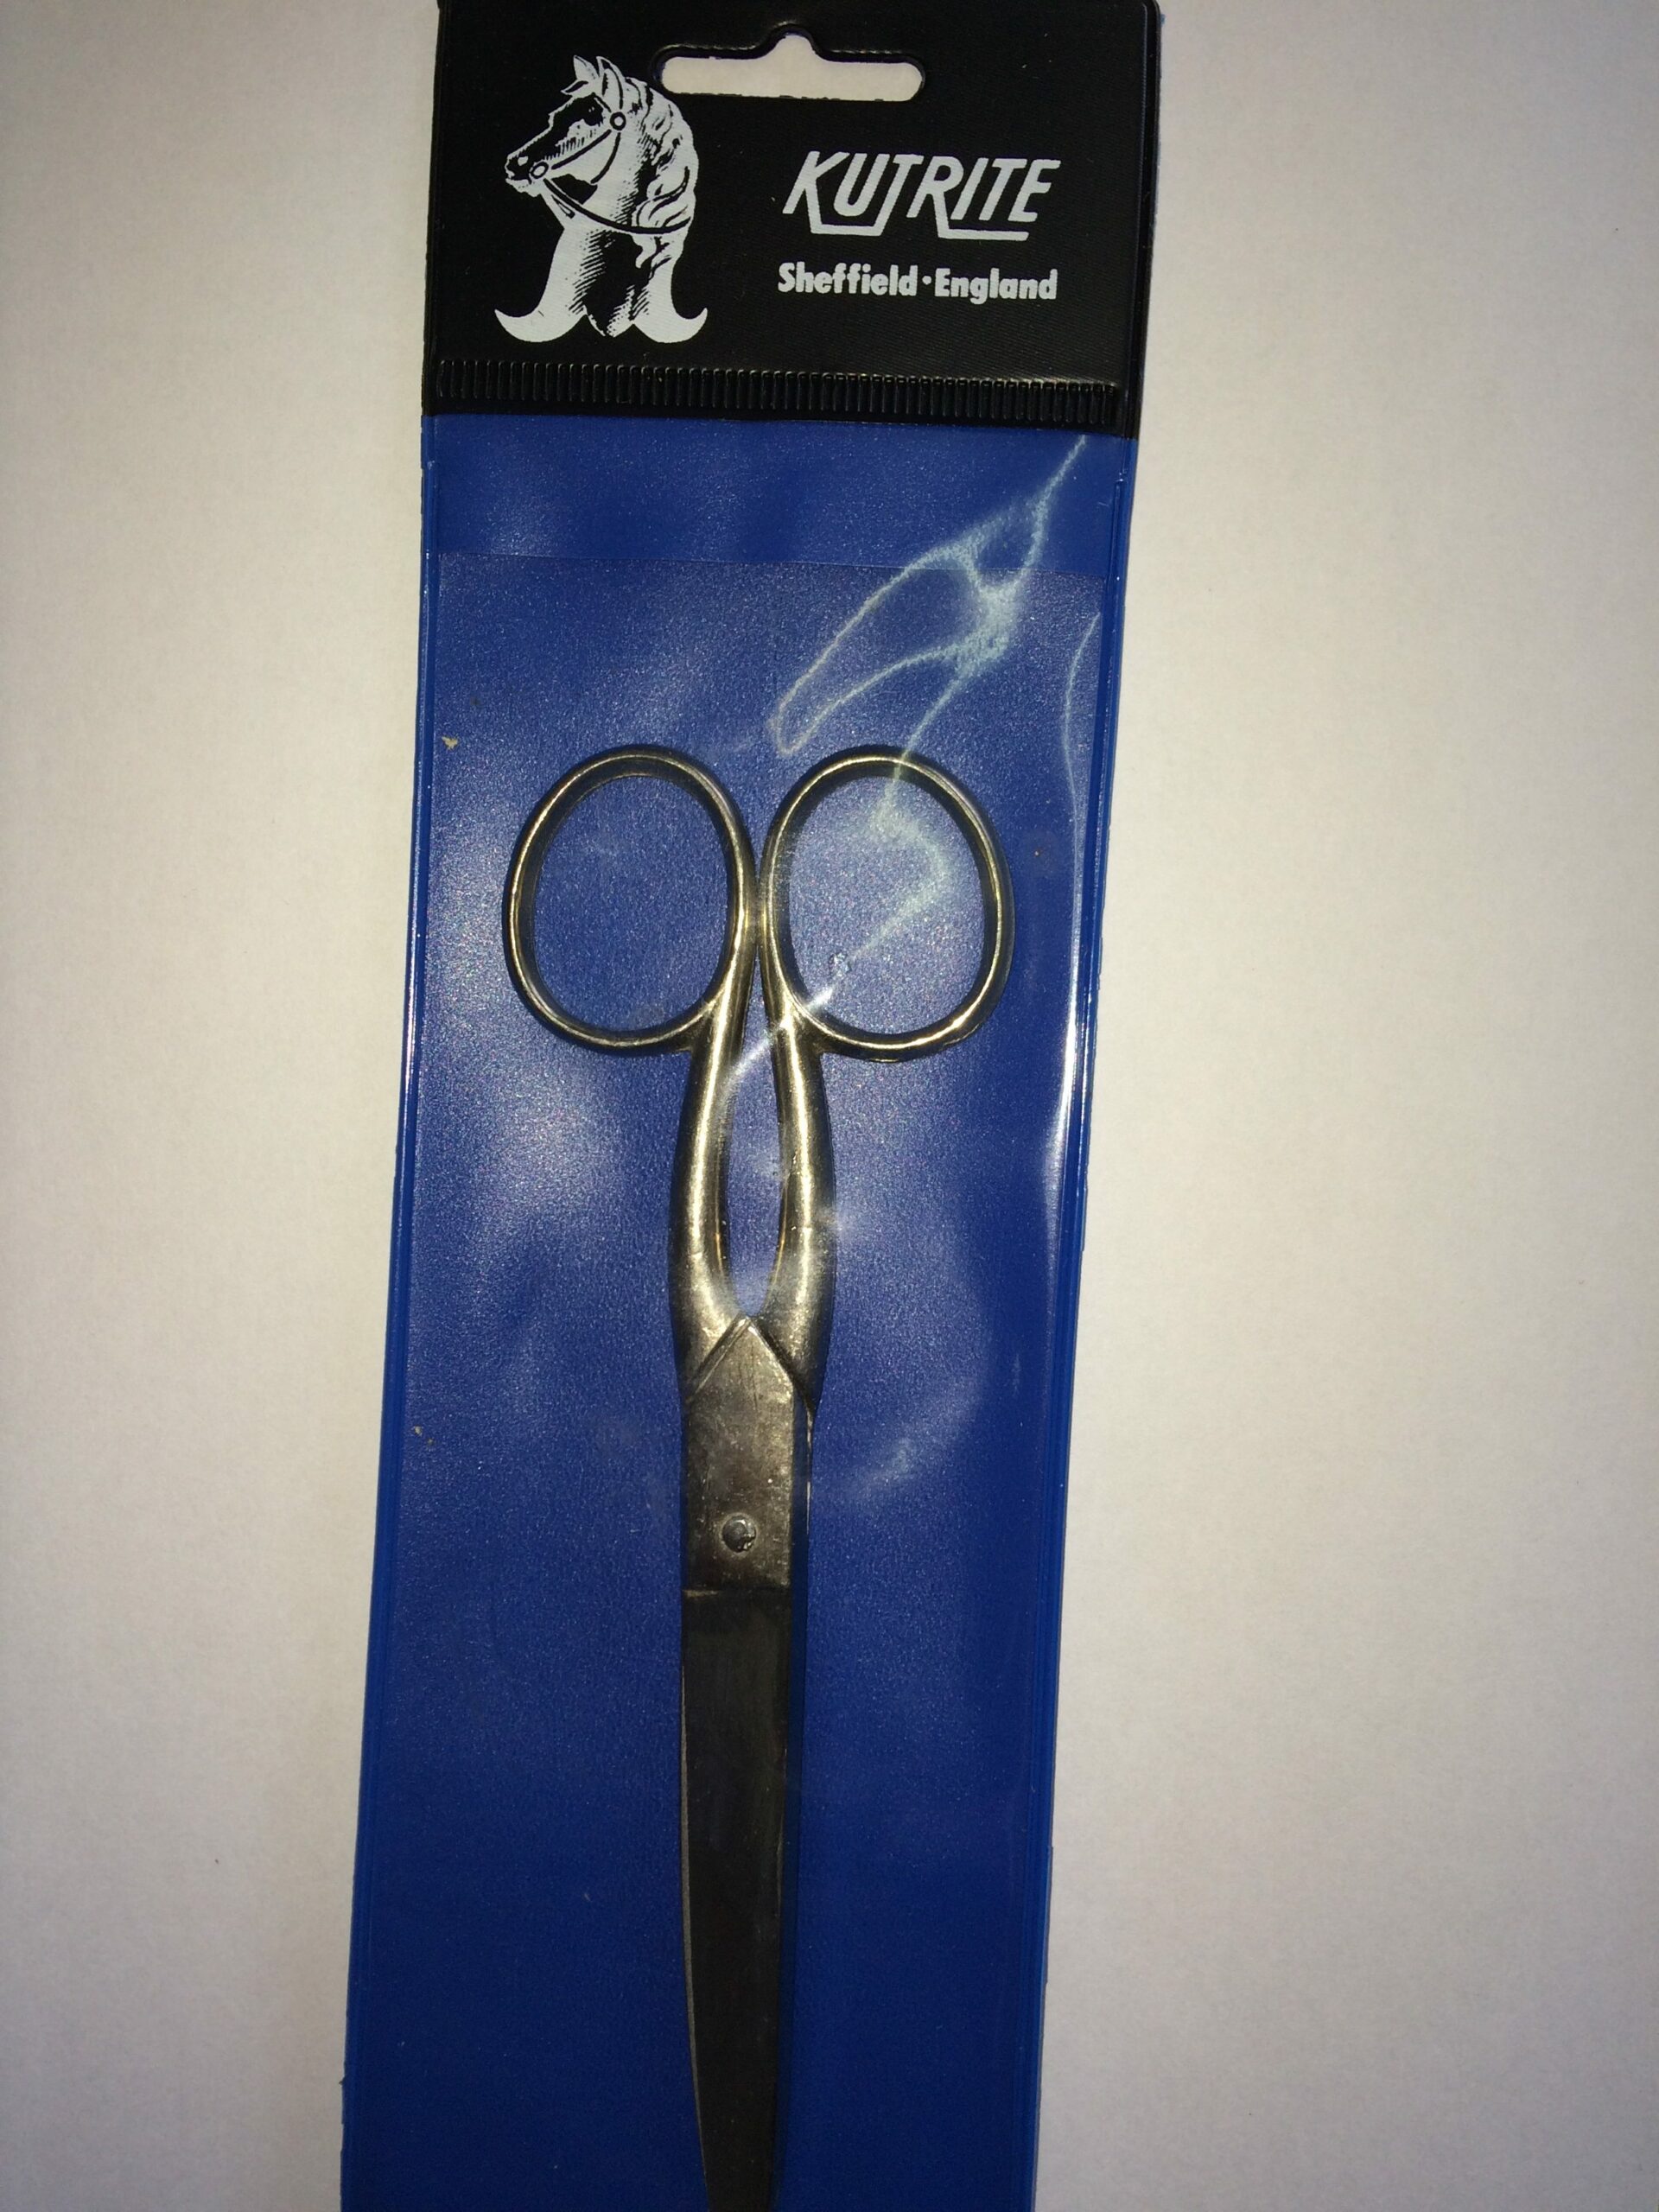 6" Kutrite Cutting Out Scissors